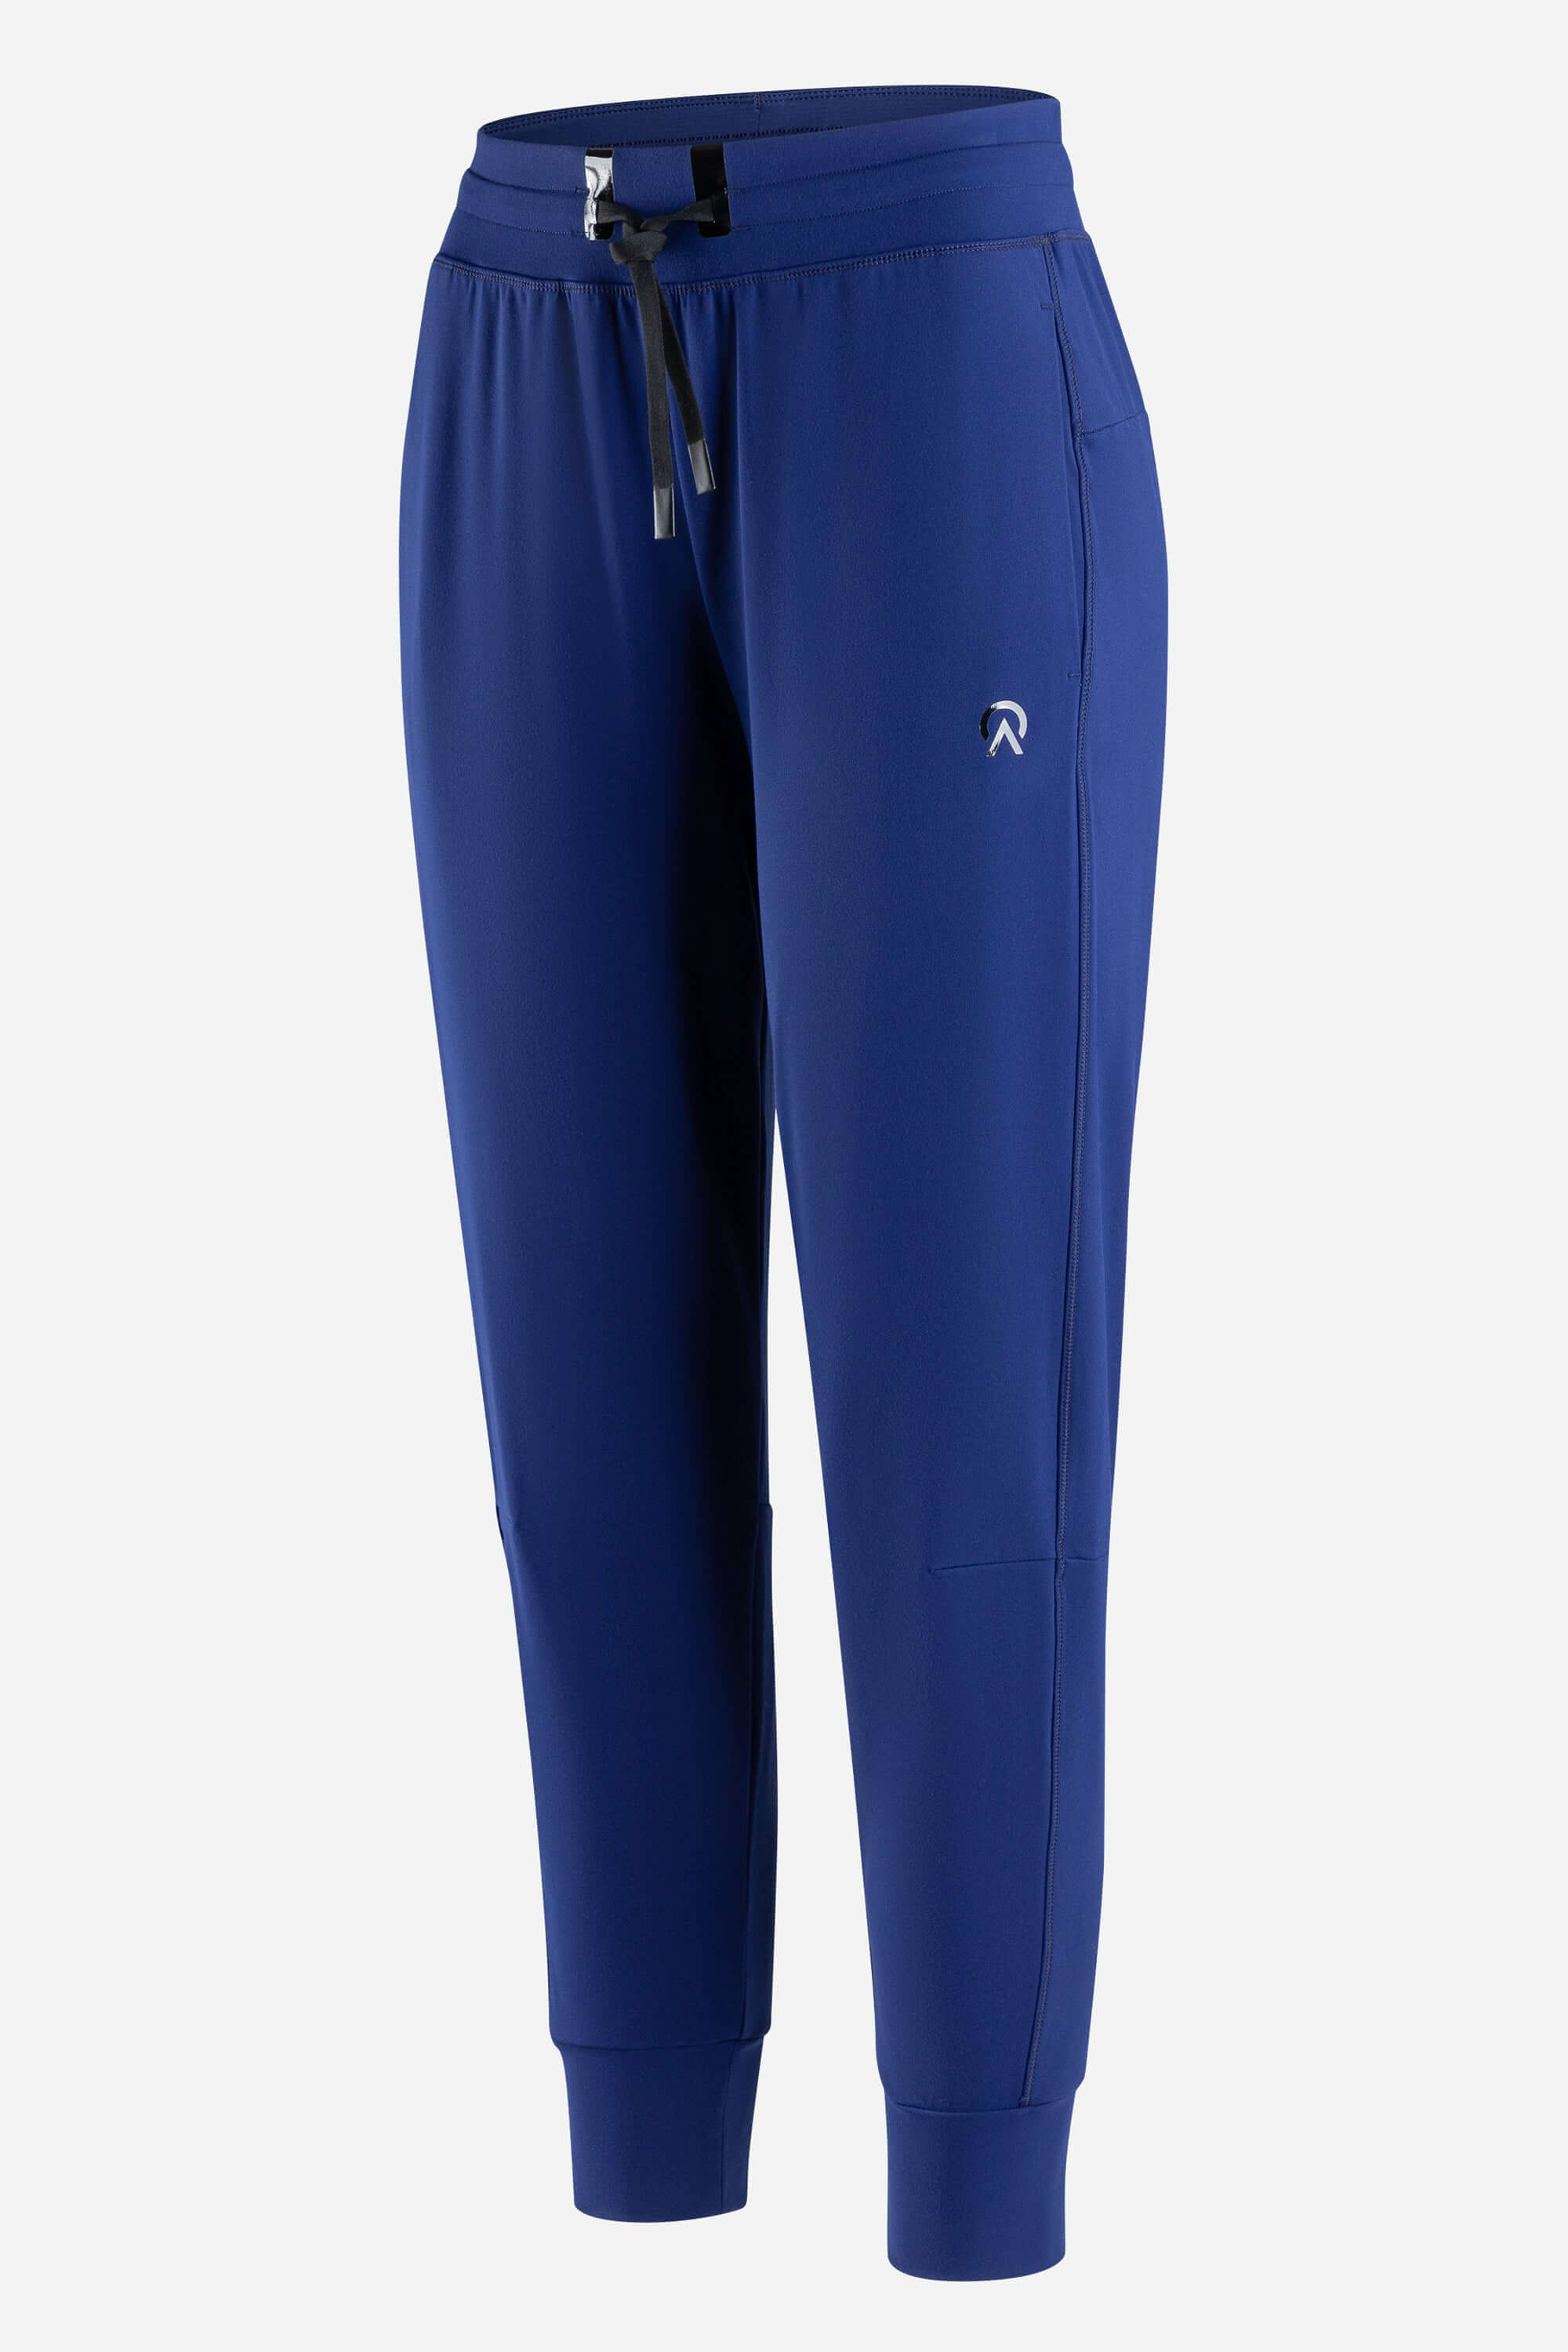 Women workout joggers in blue